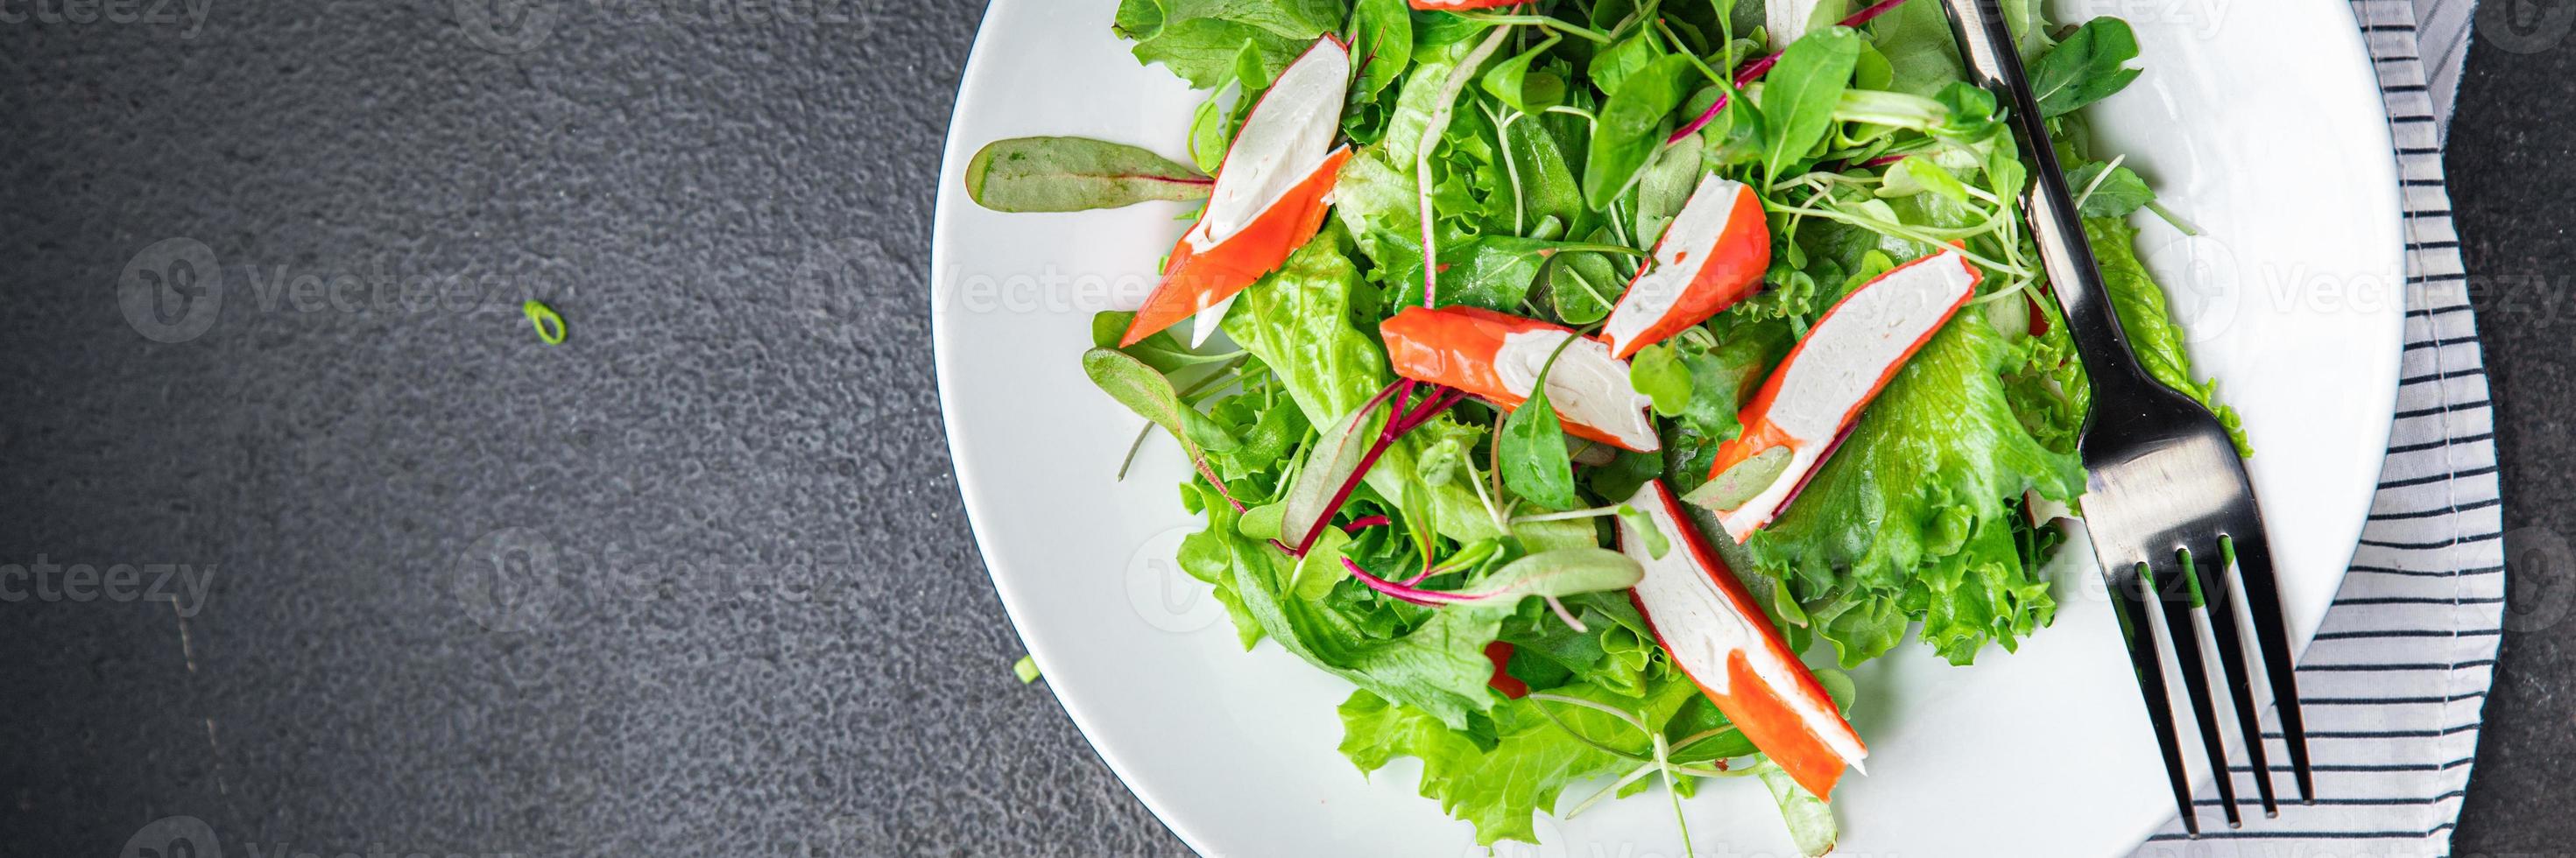 salade krabstick sla bladeren mix groen foto